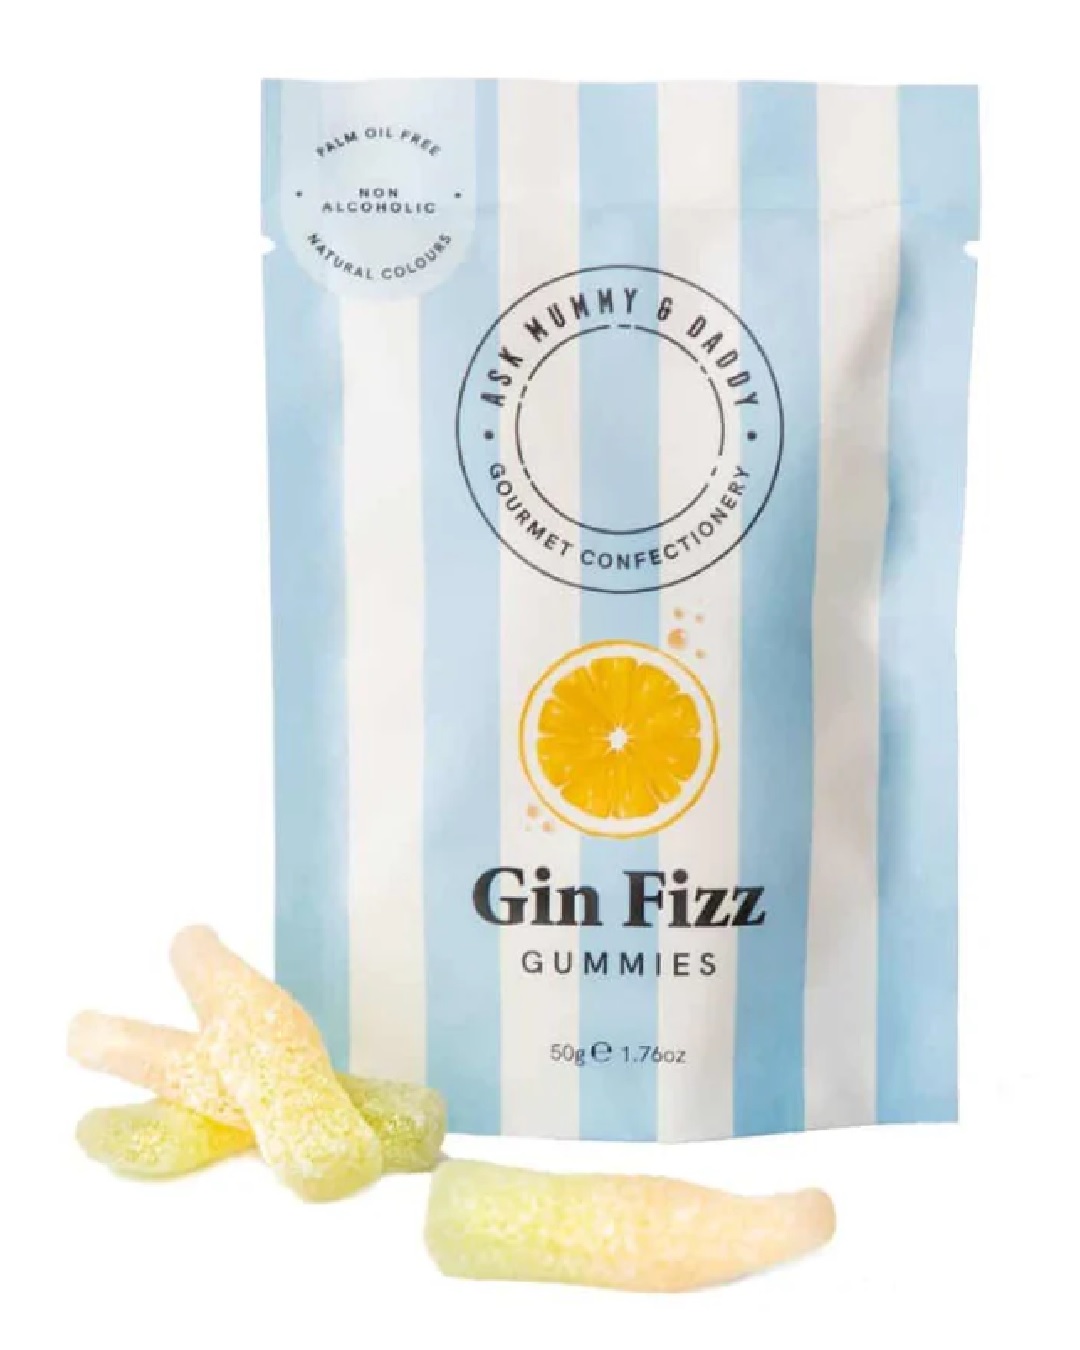 Gin Fizz gummies